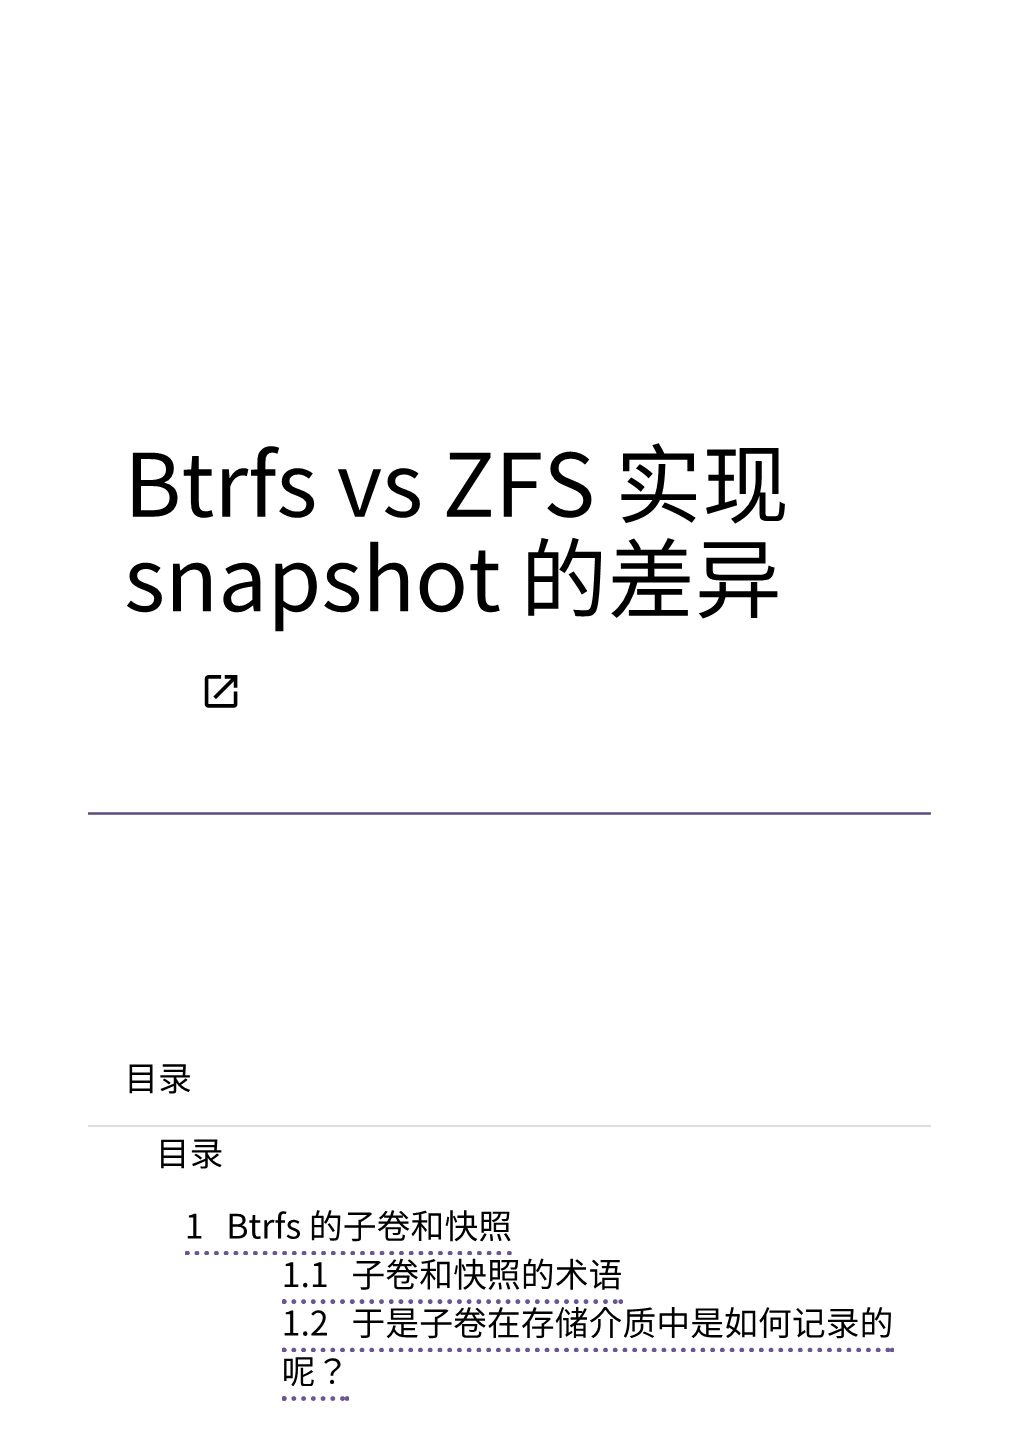 Btrfs Vs ZFS 实现snapshot